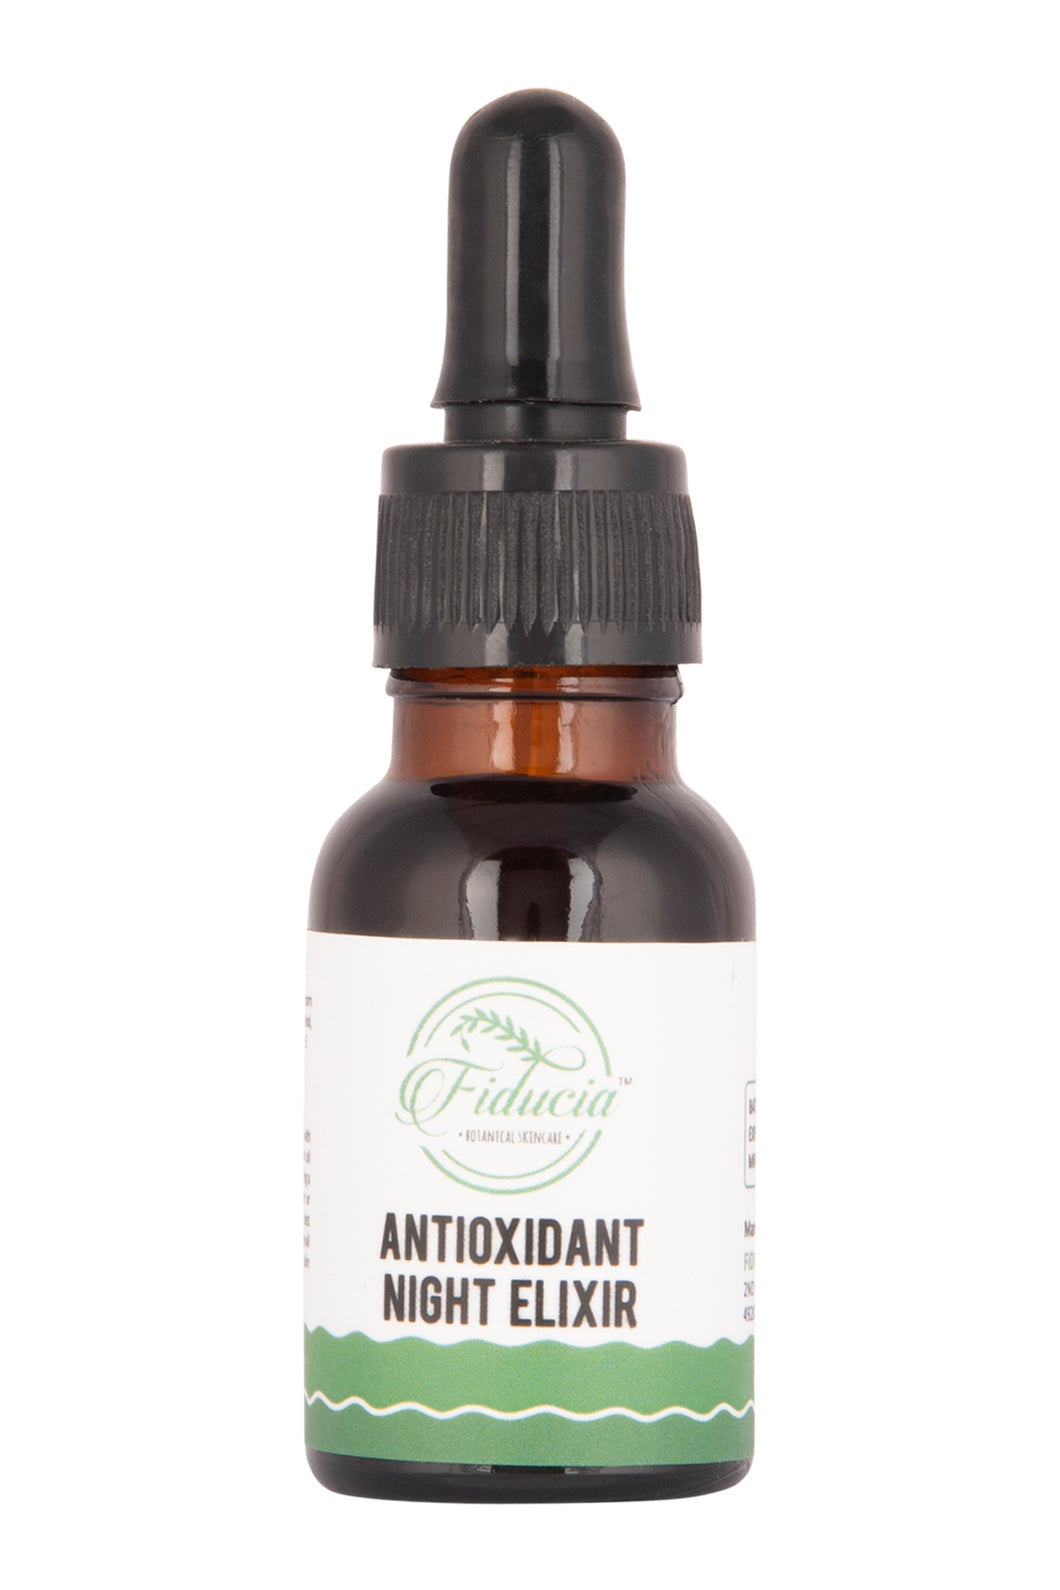 Antioxidant night elixir - Fiducia Botanicals